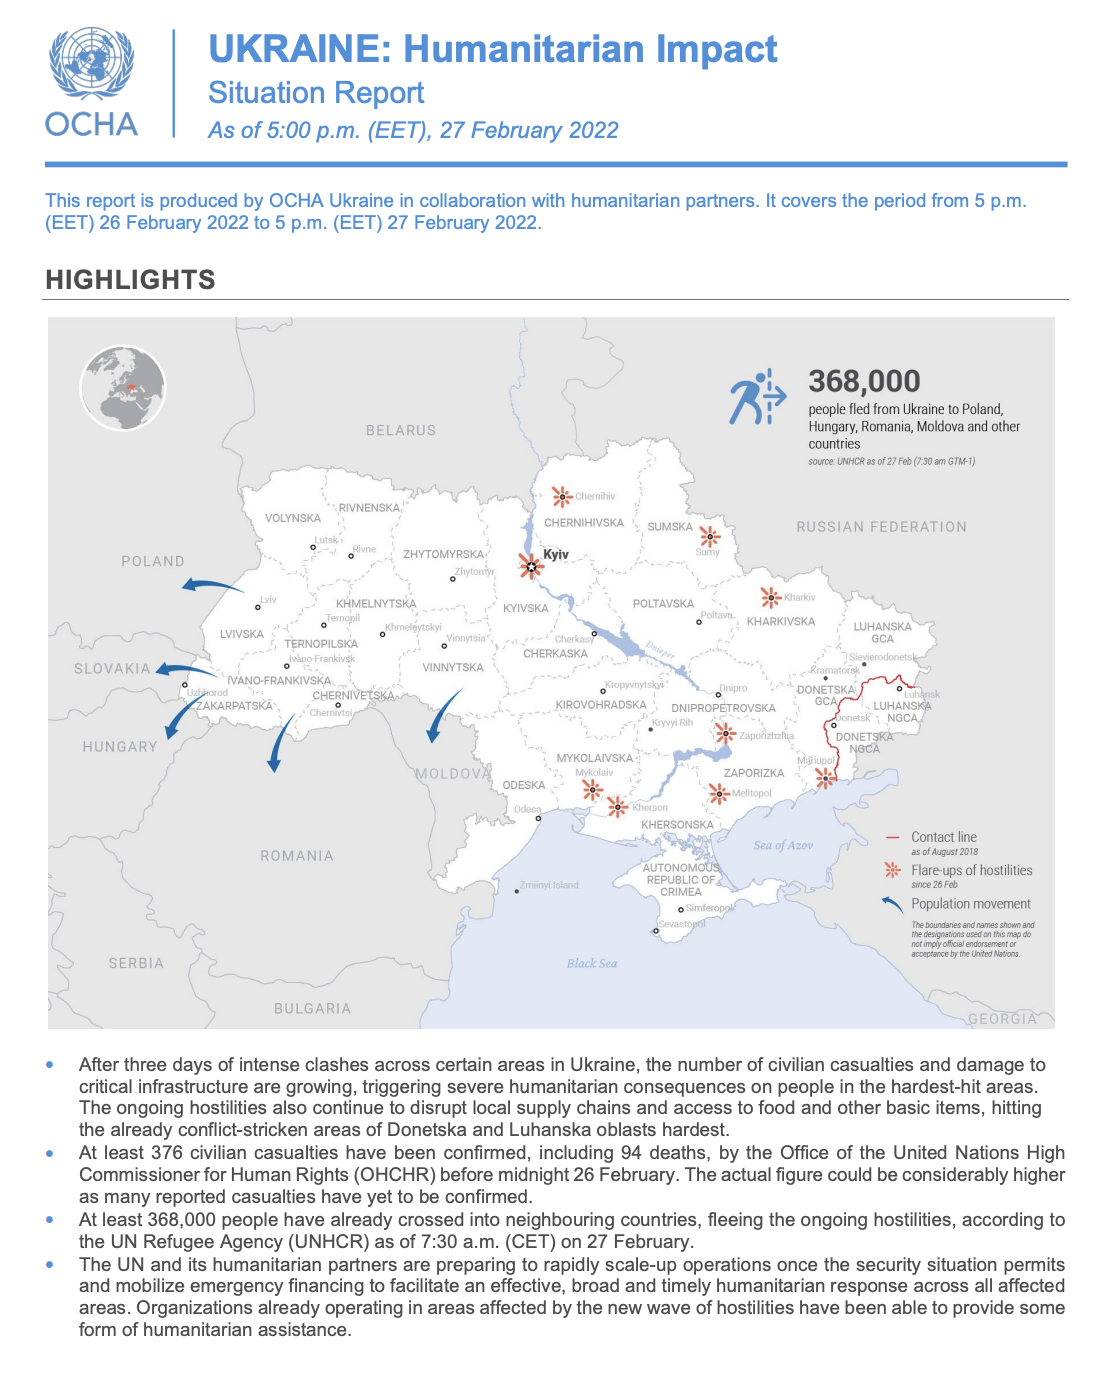 Ukraine: Humanitarian Impact Situation Report As of 5:00 p.m. (EET), 27 February 2022